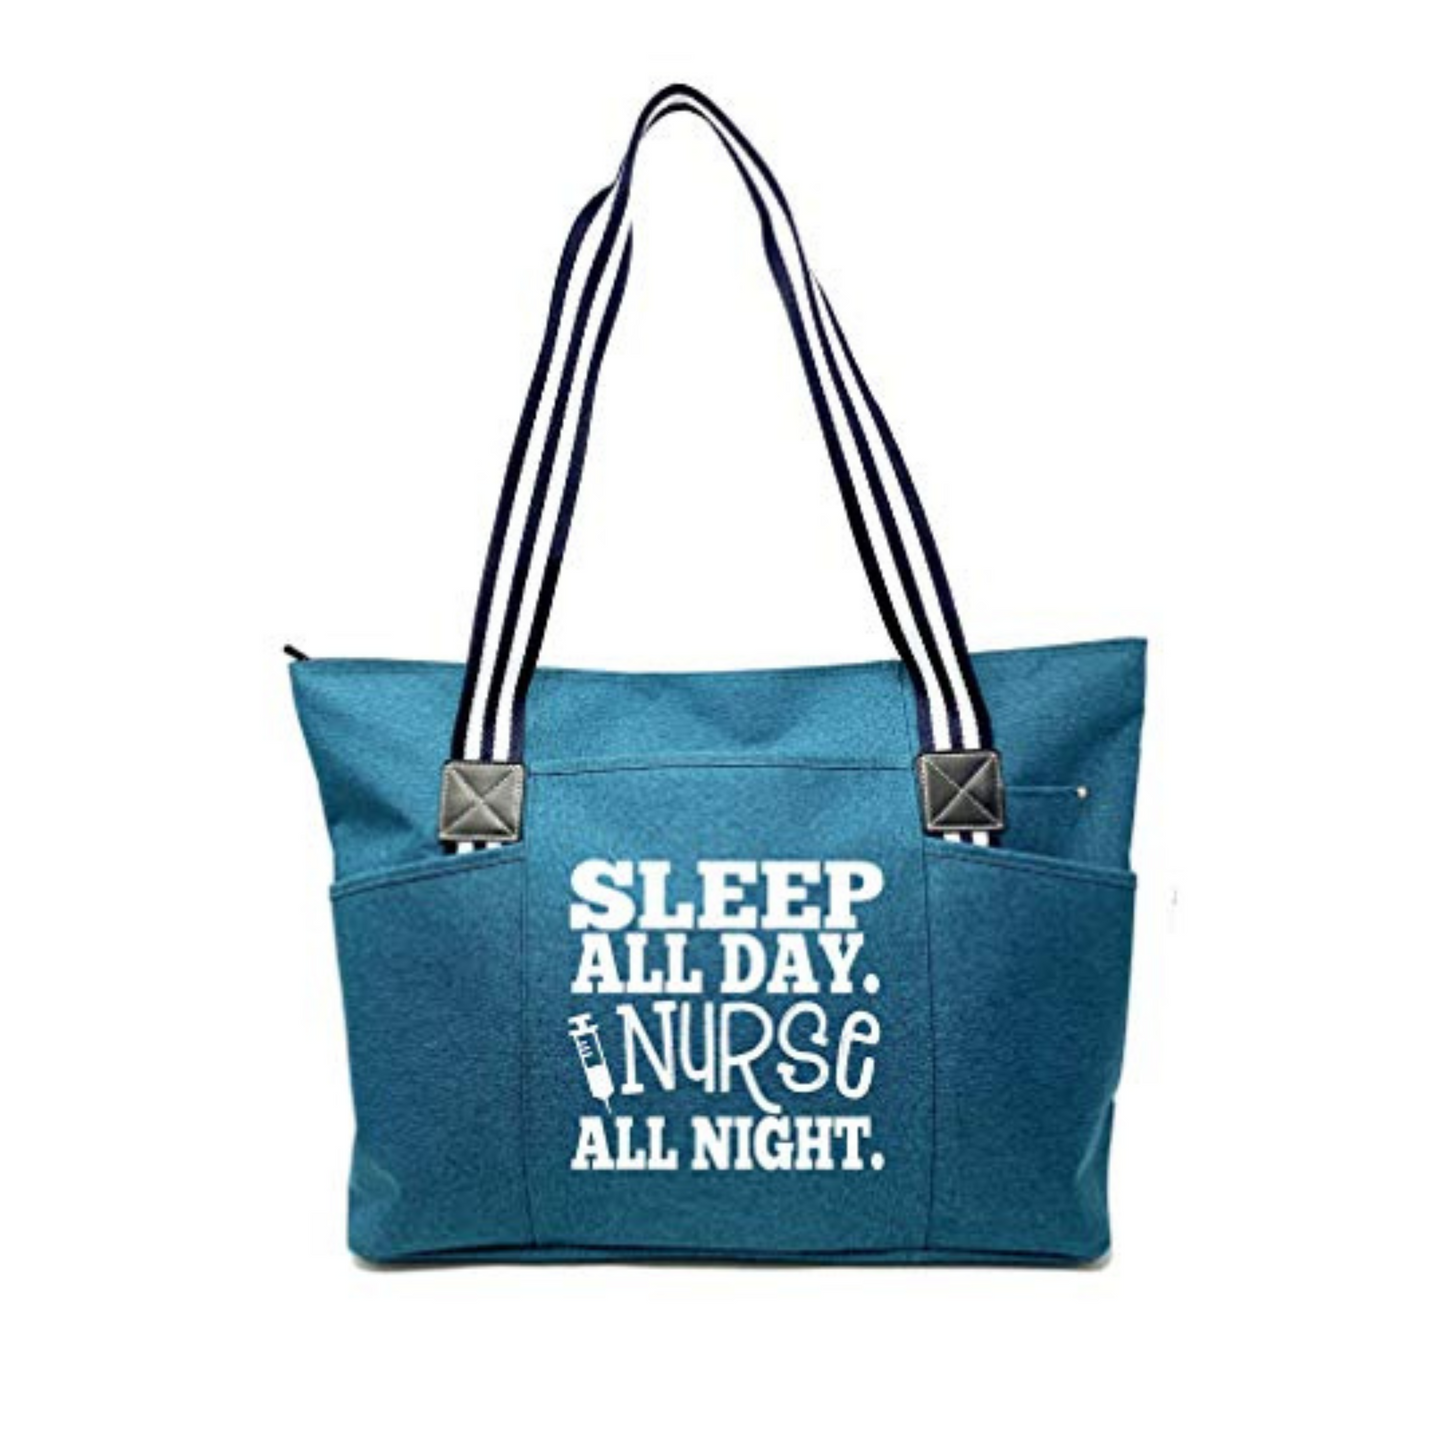 Sleep All Day Nurse All Night Teal Tessa Zippered Tote Bag